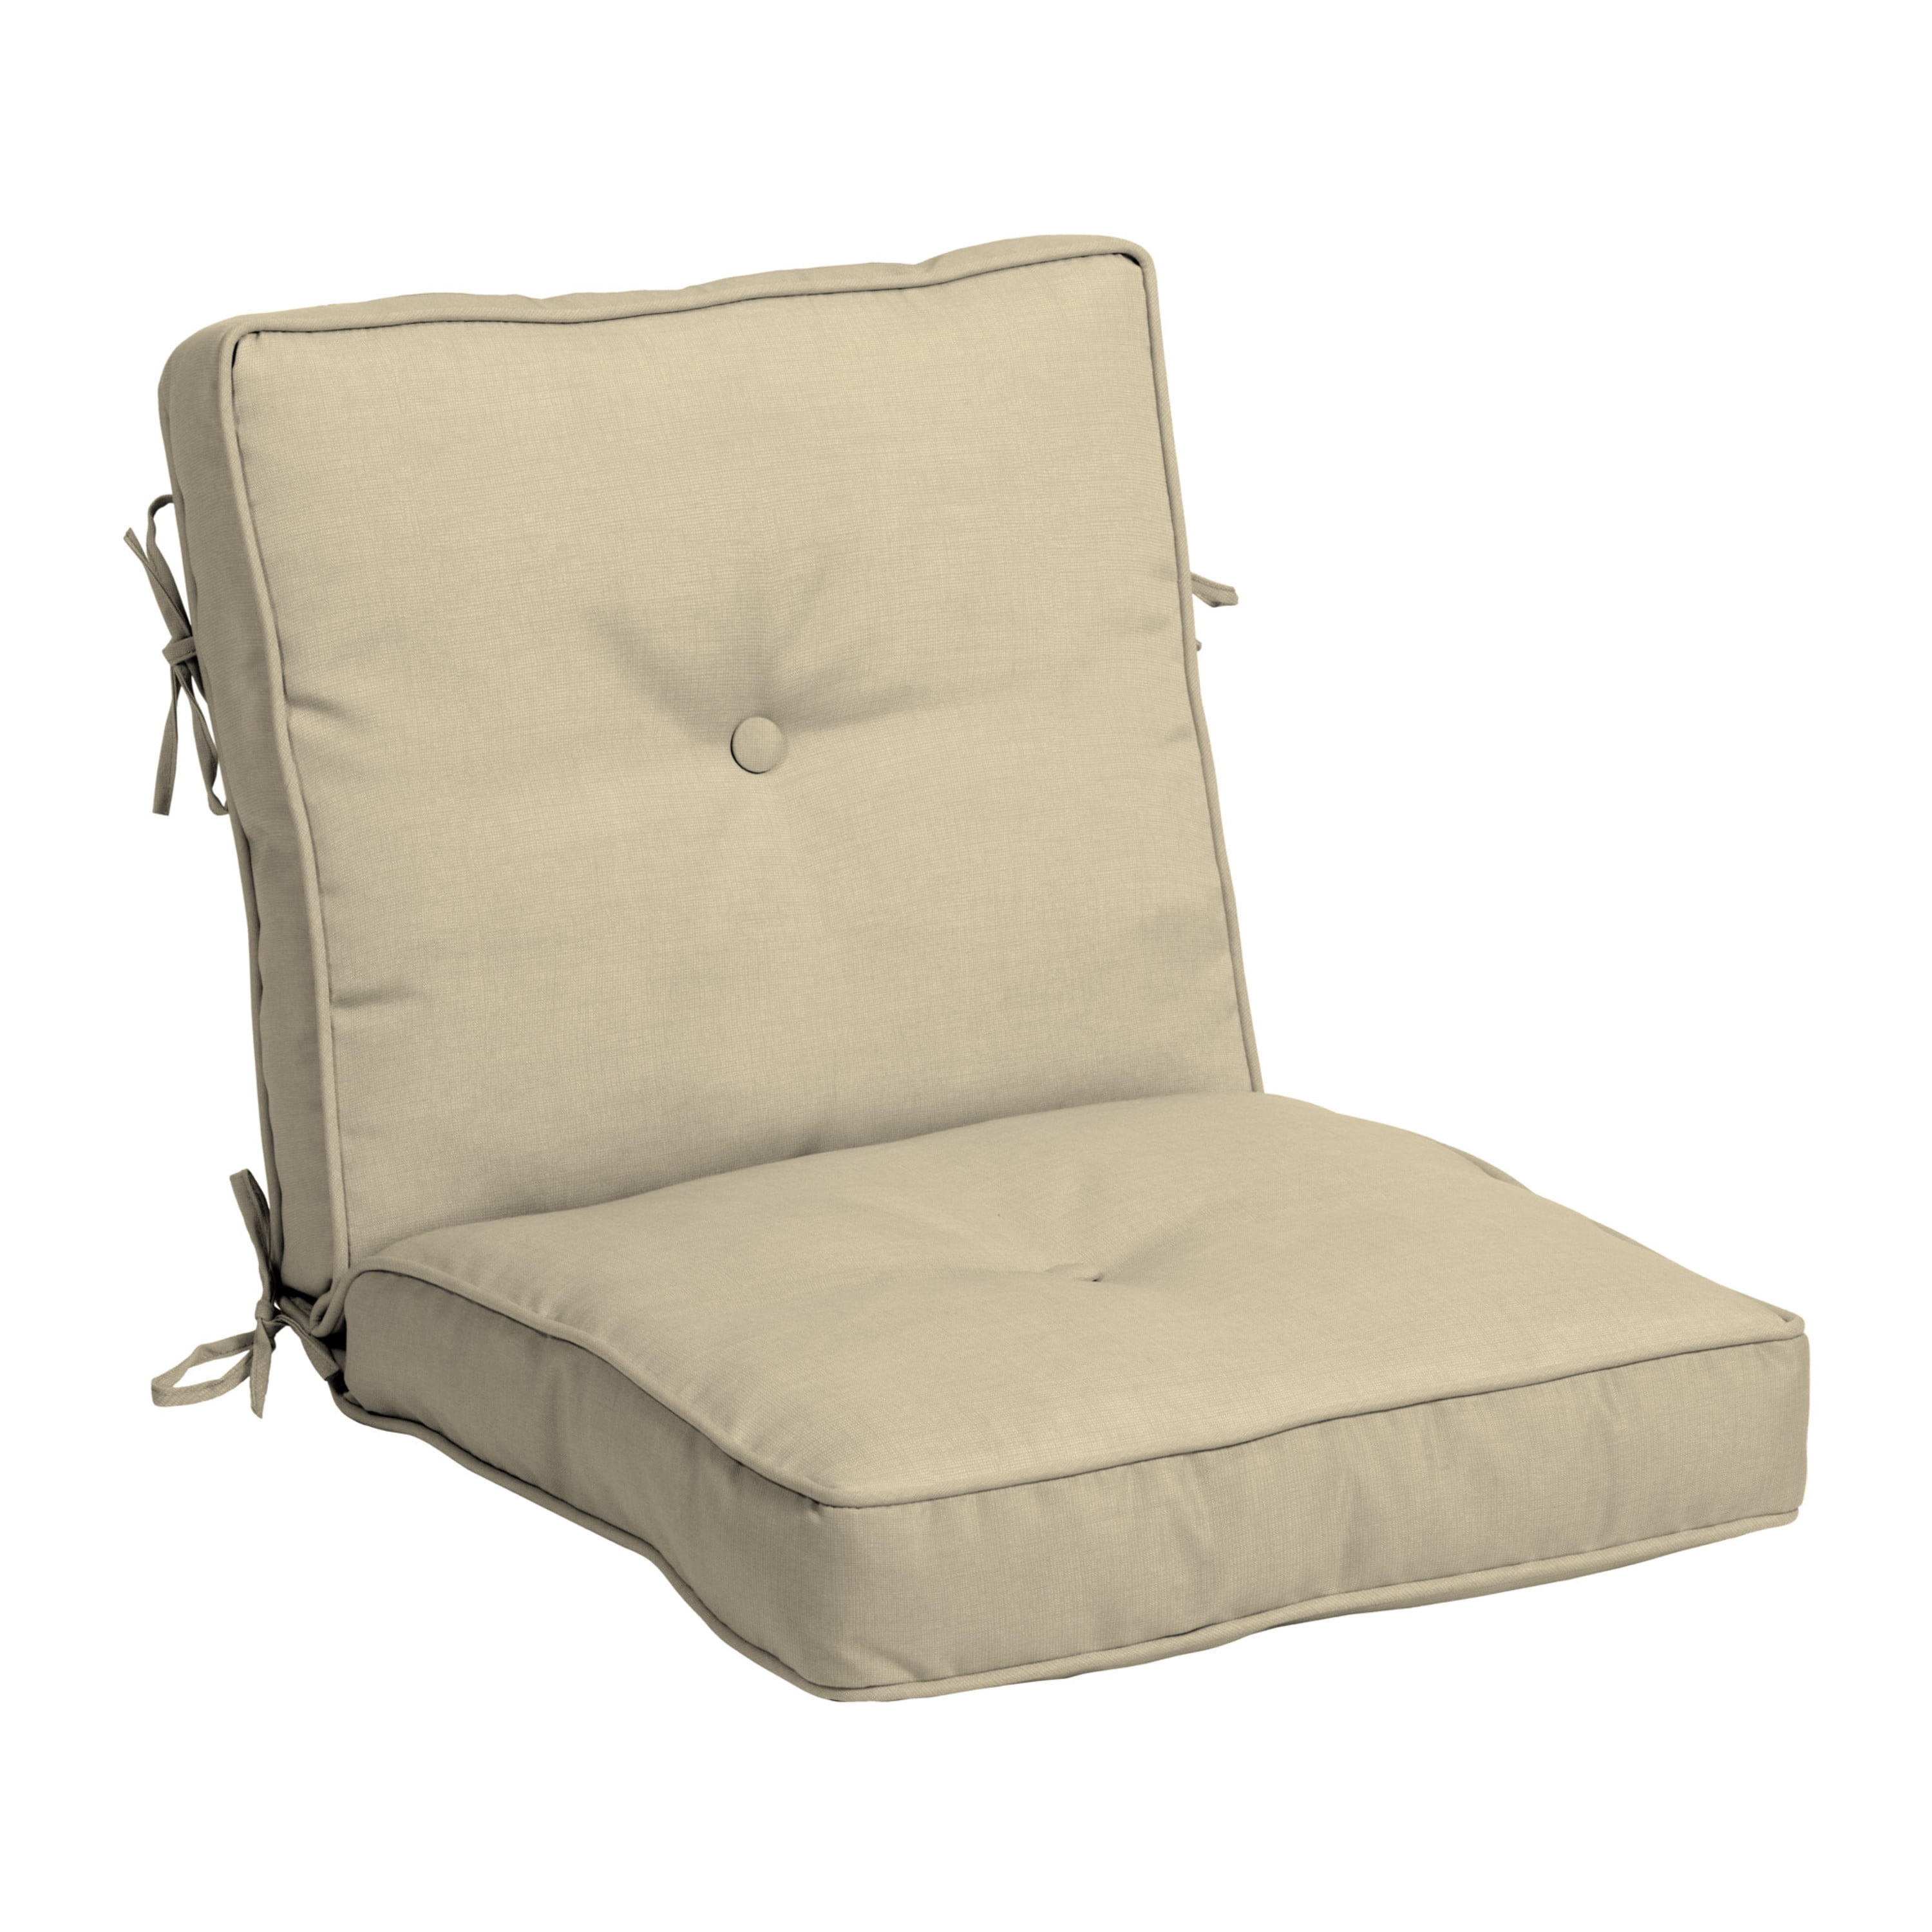 downluxe Outdoor Chair Cushions, Waterproof Tufted Overstuffed U-Shaped  Memory Foam Seat Cushions for Patio Funiture, 19 x 19 x 5, Khaki, 2 Pack